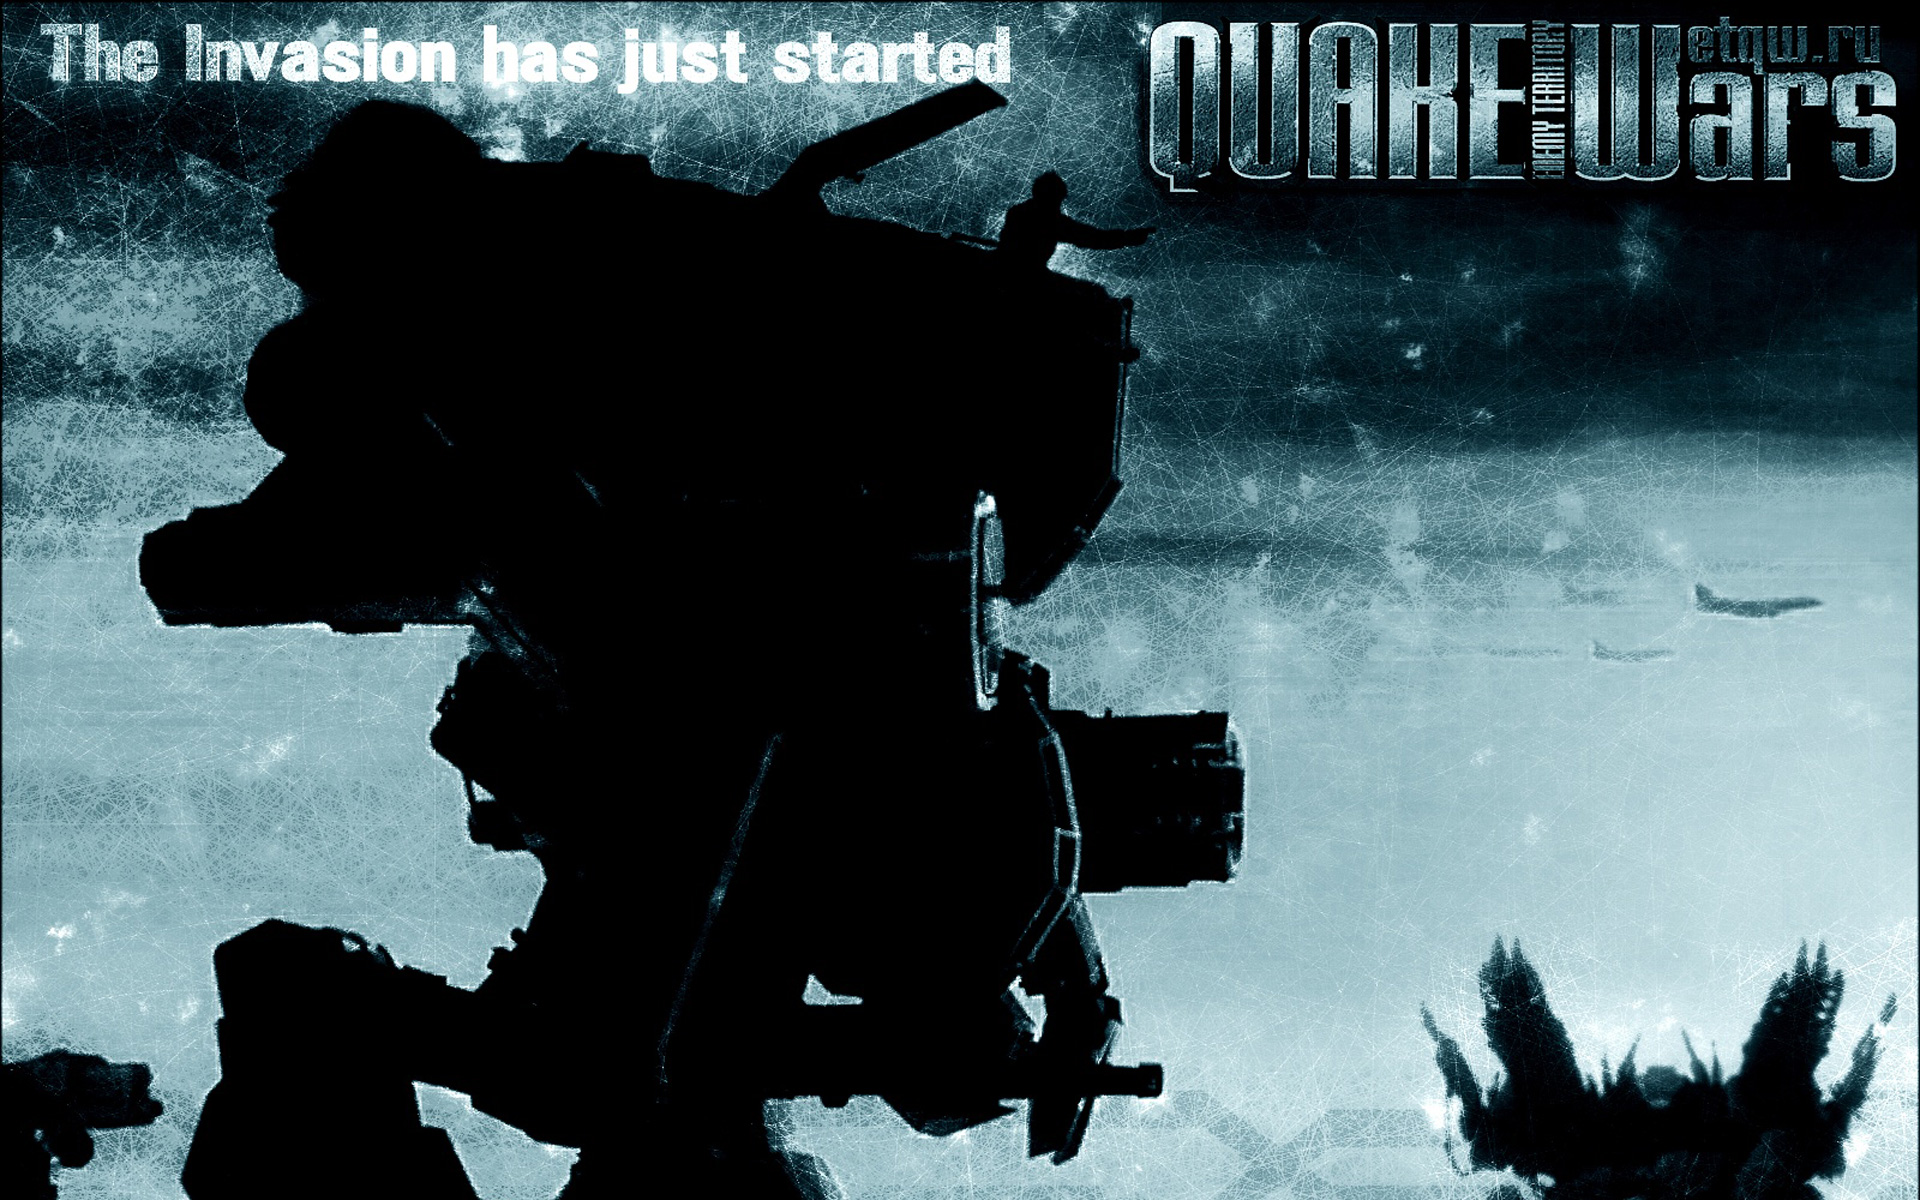 video game, enemy territory: quake wars, quake 4K, Ultra HD